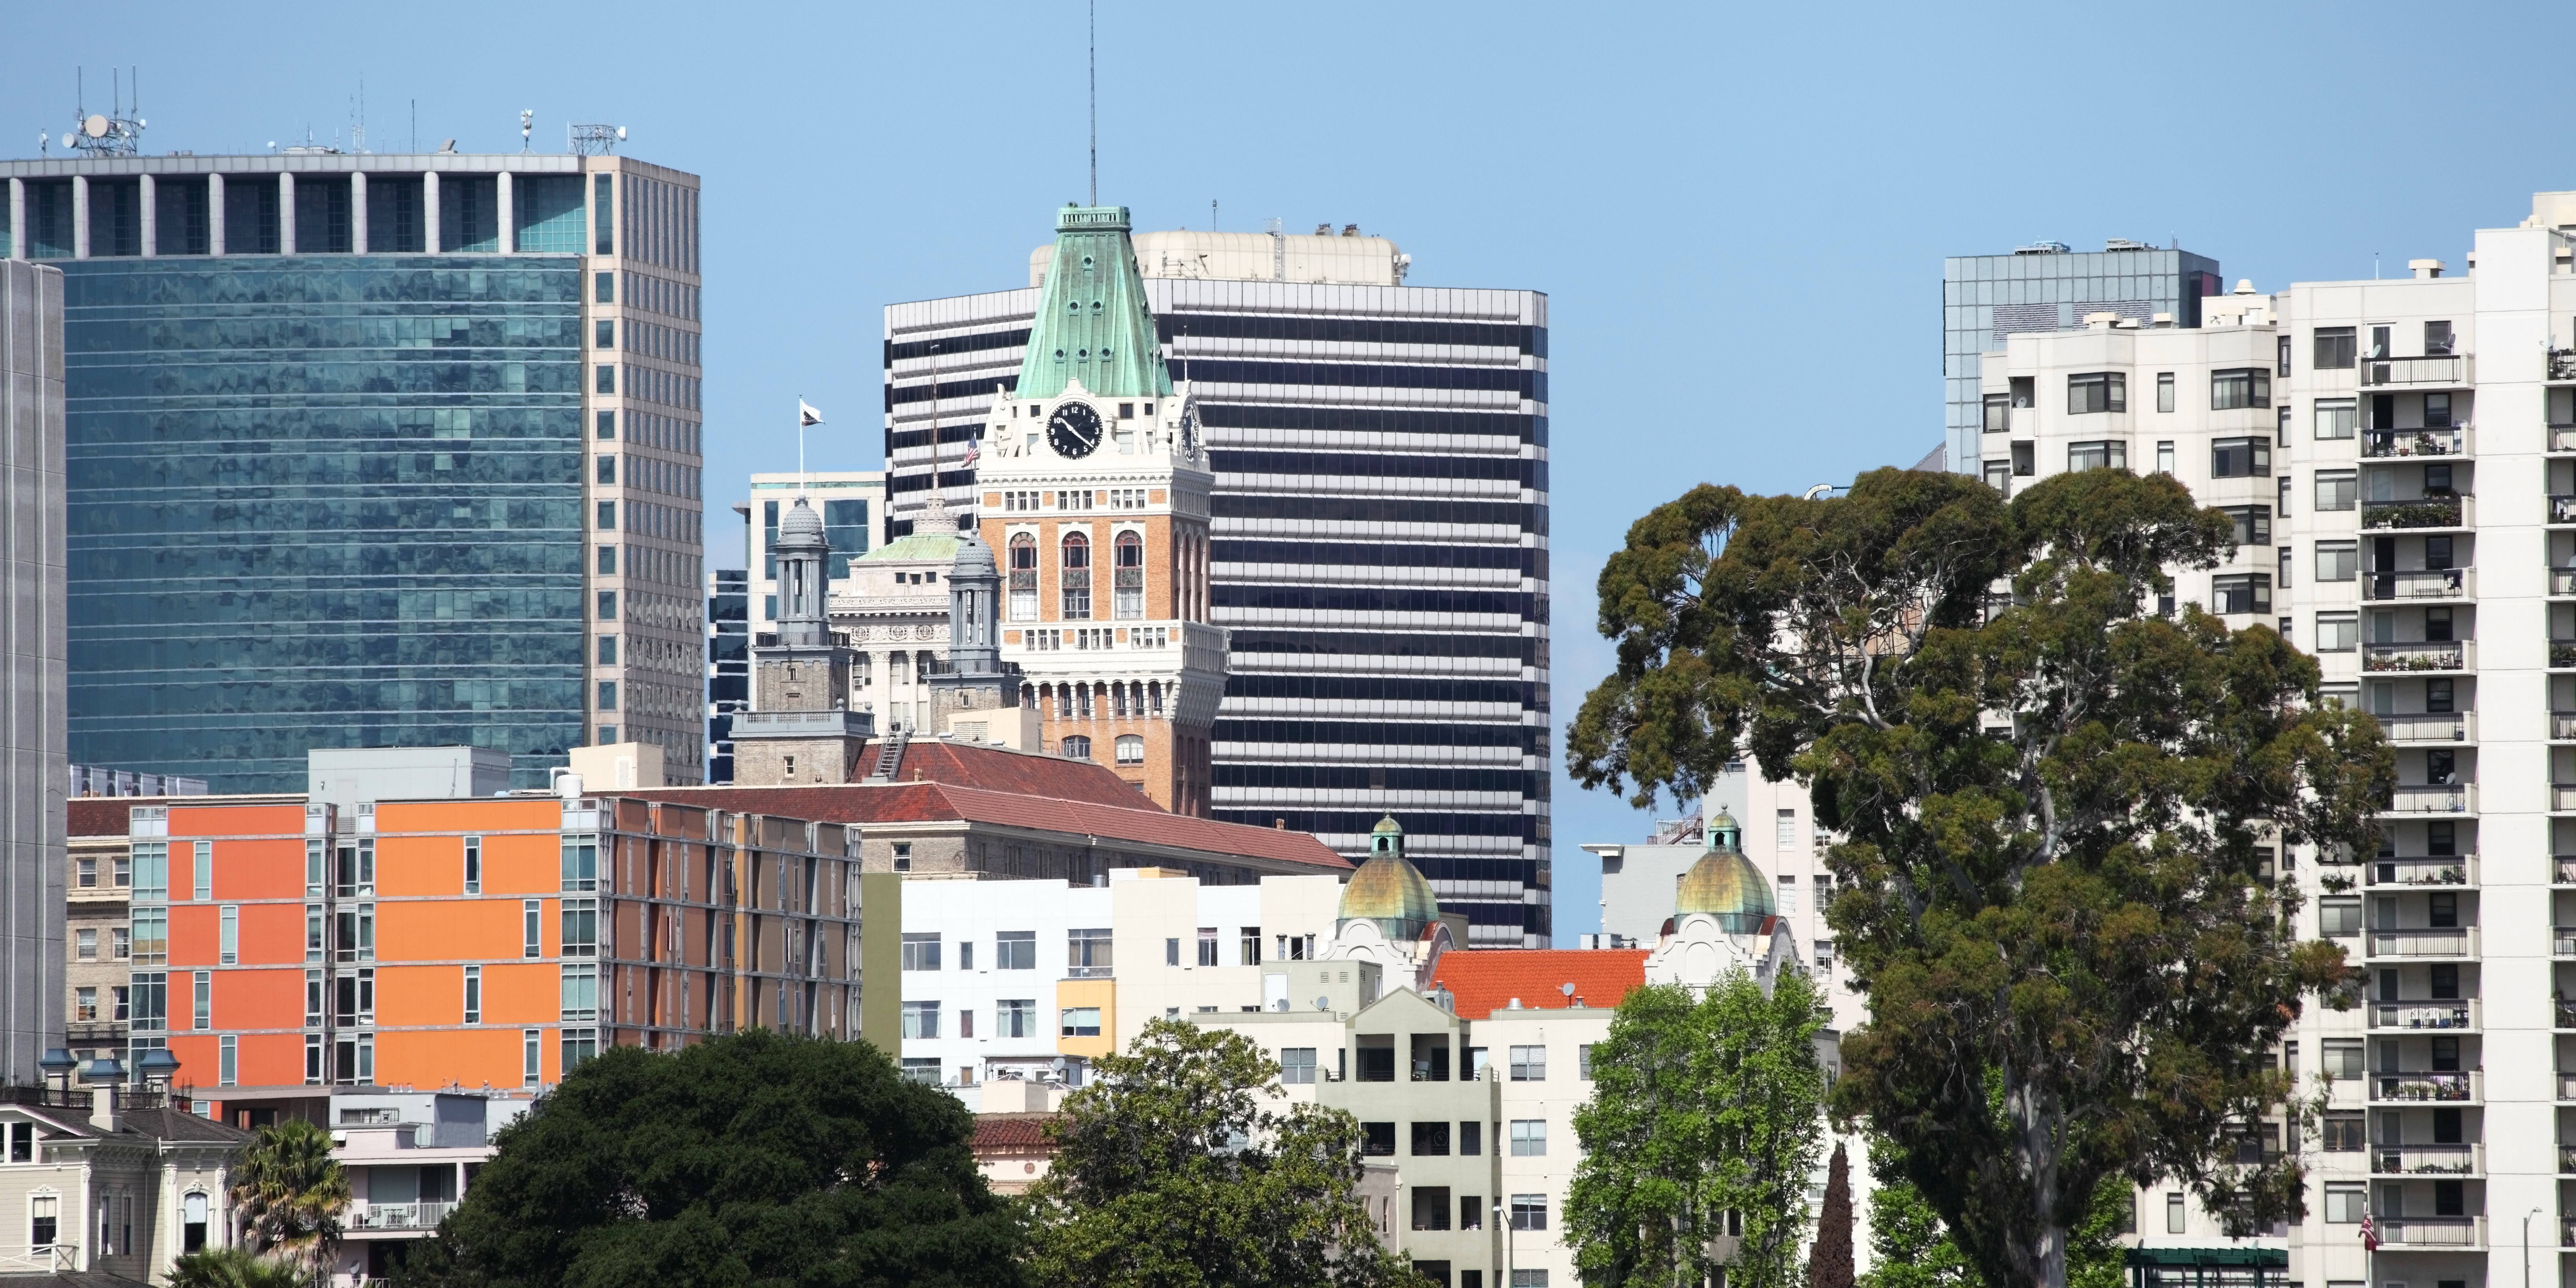 Photo of the Oakland skyline including the tribune building